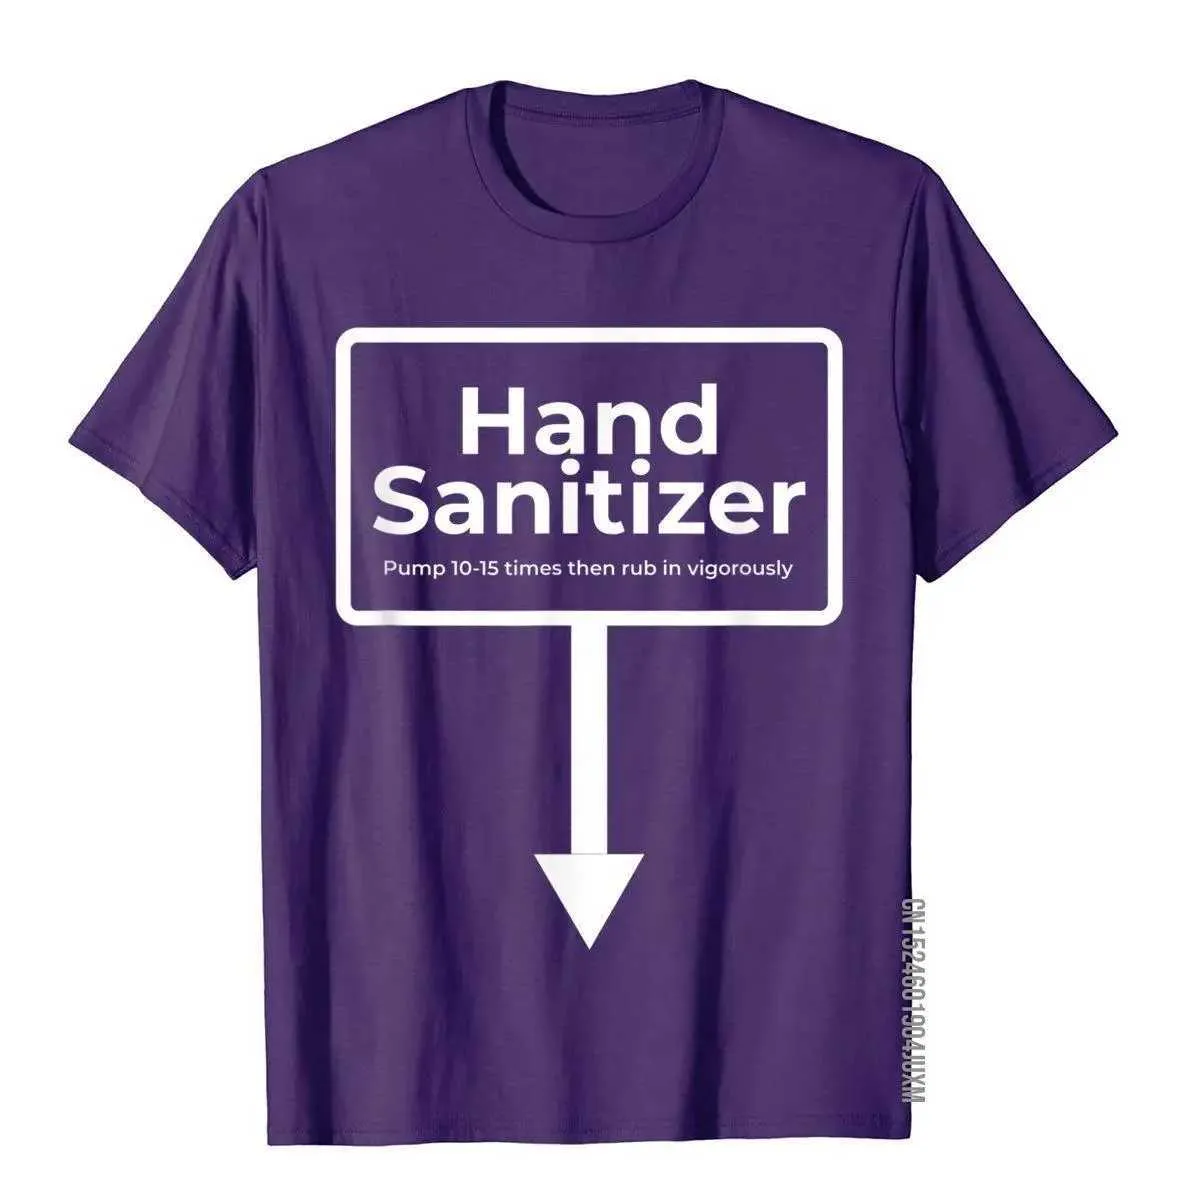 Hand Sanitizer - Funny Adult Humour Christmas Gag Gift T-Shirt__97A3351purple